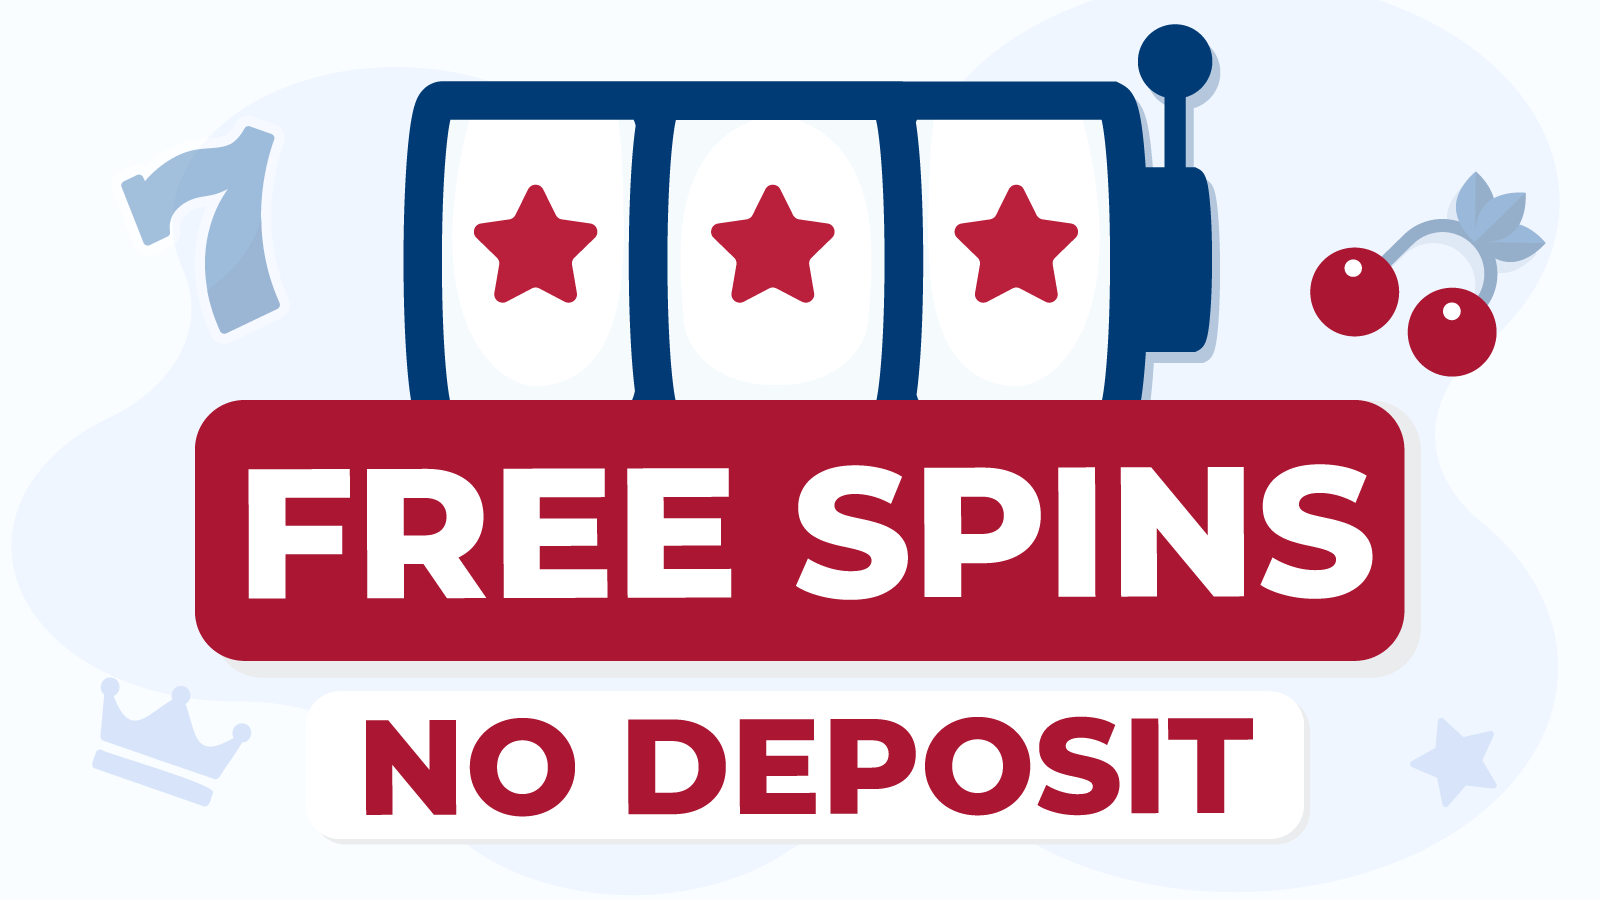 casino free spins on registration